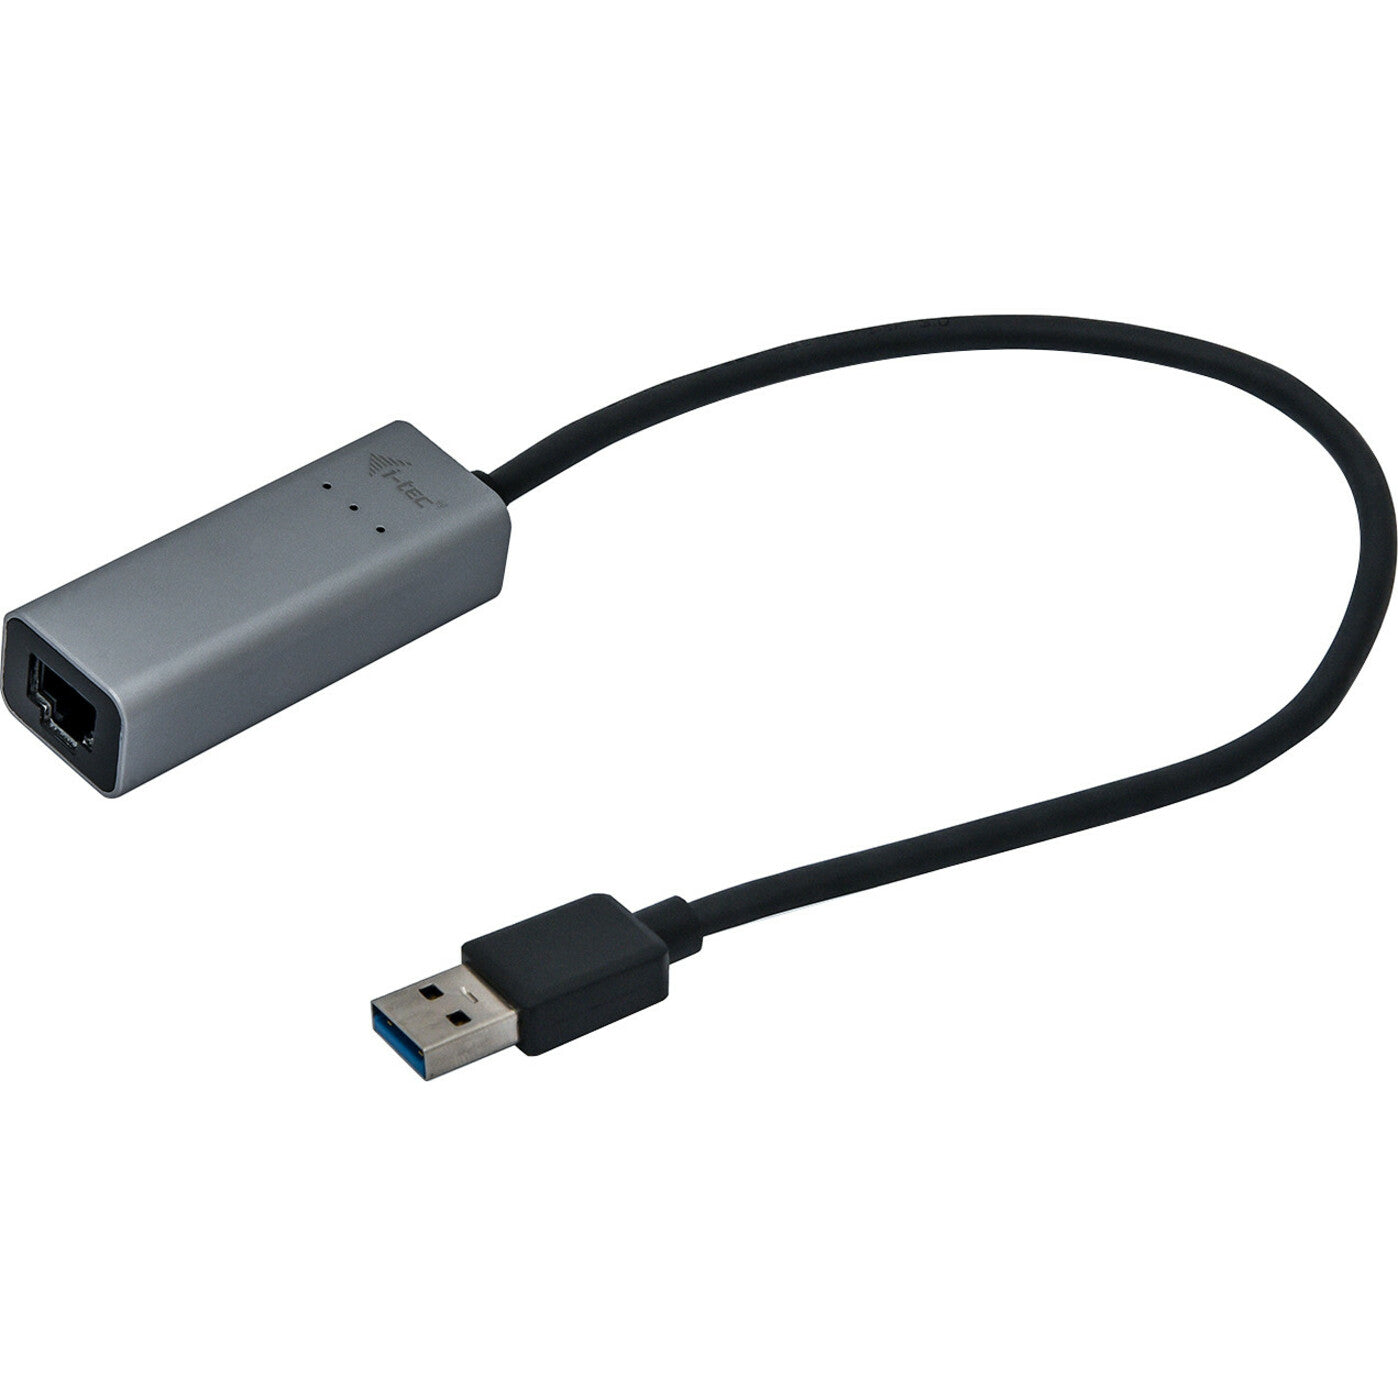 i-tec U3METALGLAN USB 3.0 Metal Gigabit Ethernet Adapter, High-Speed Network Connection